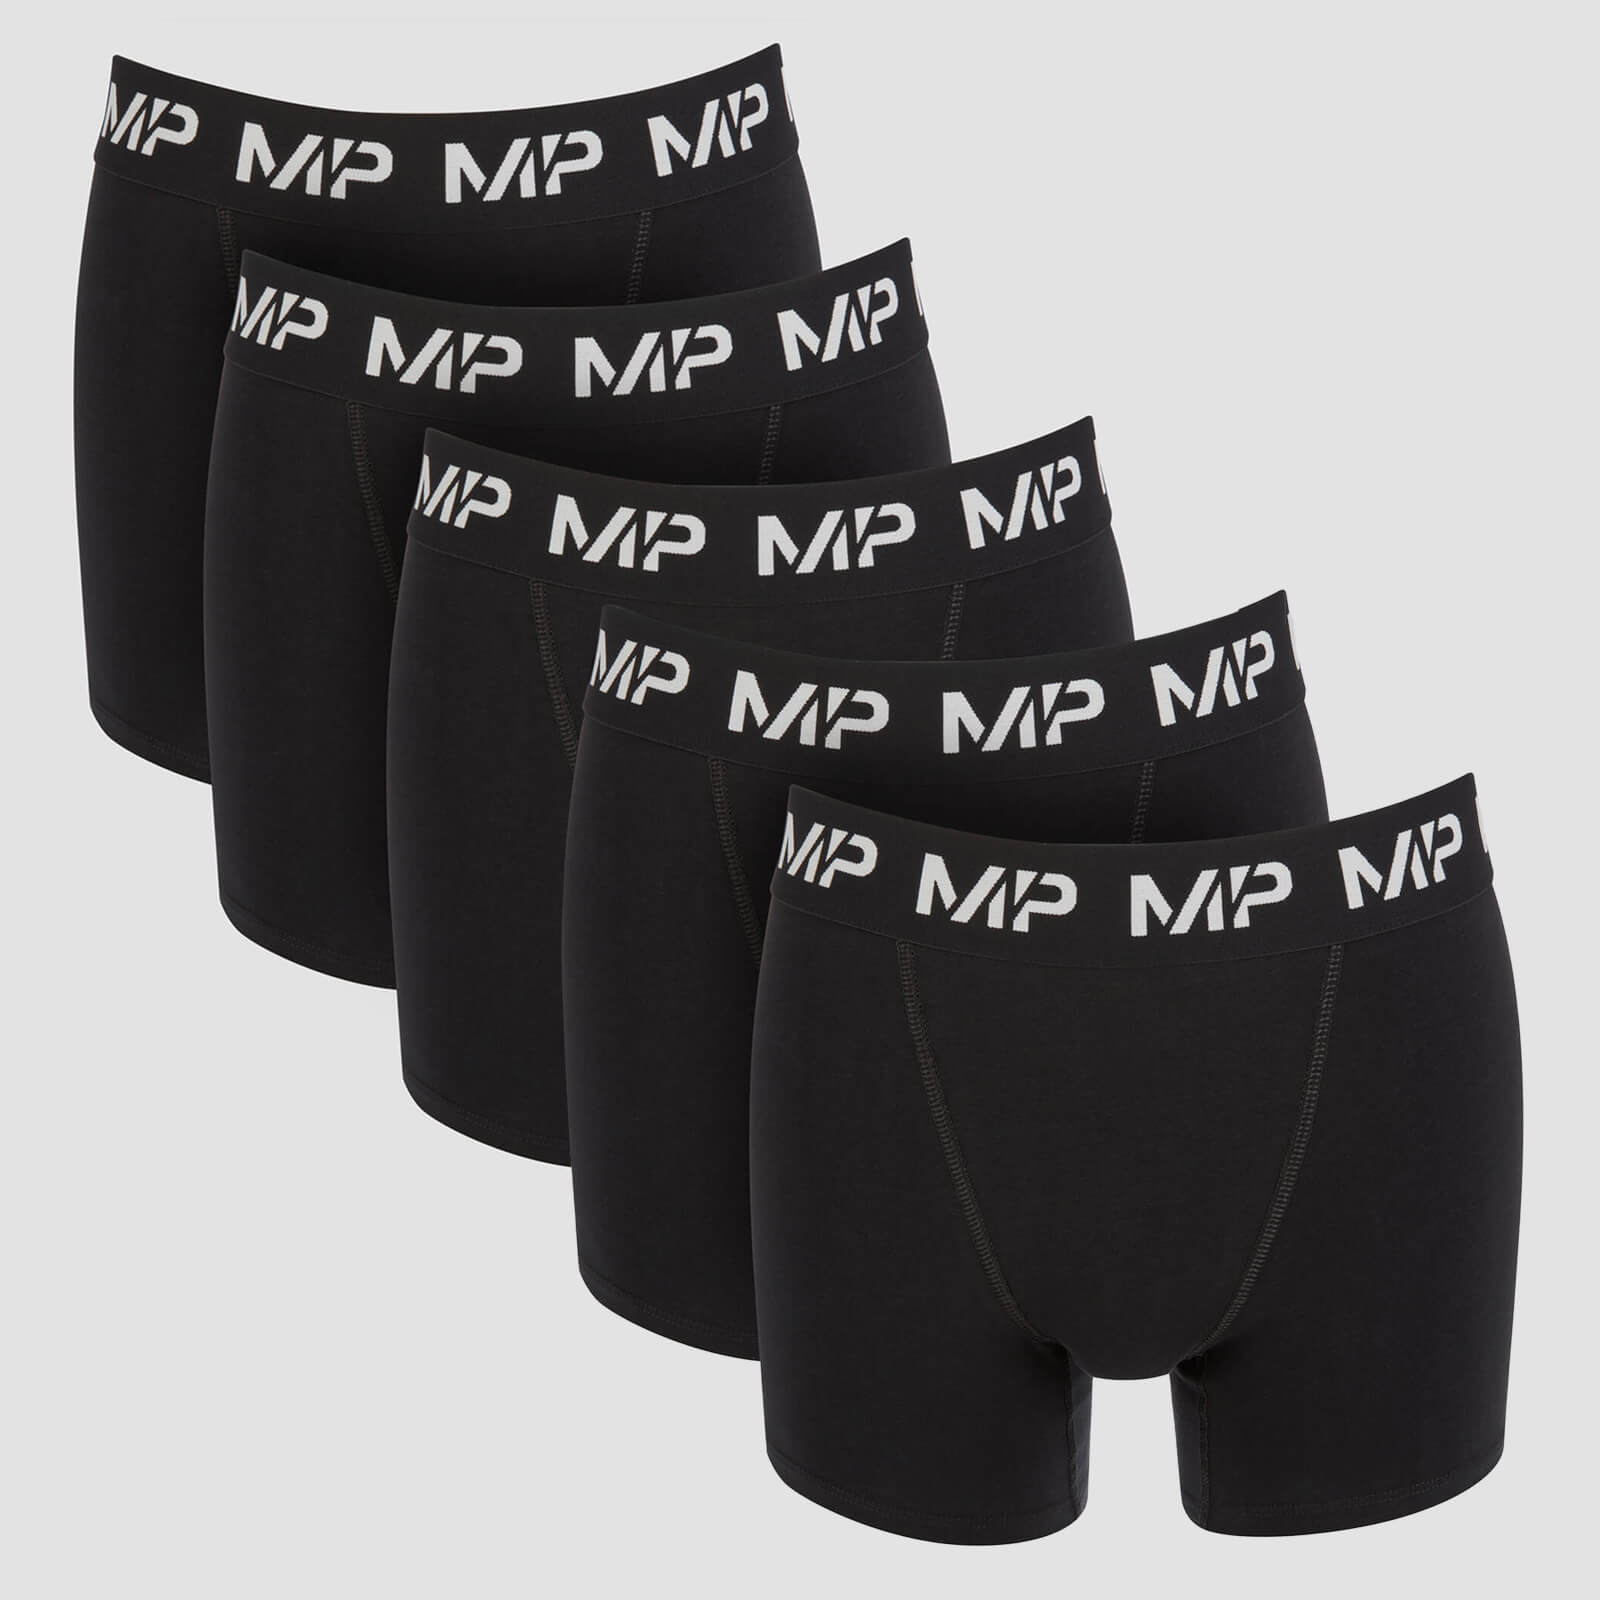 MP Men's Boxers (5 Pack) – Black - XS